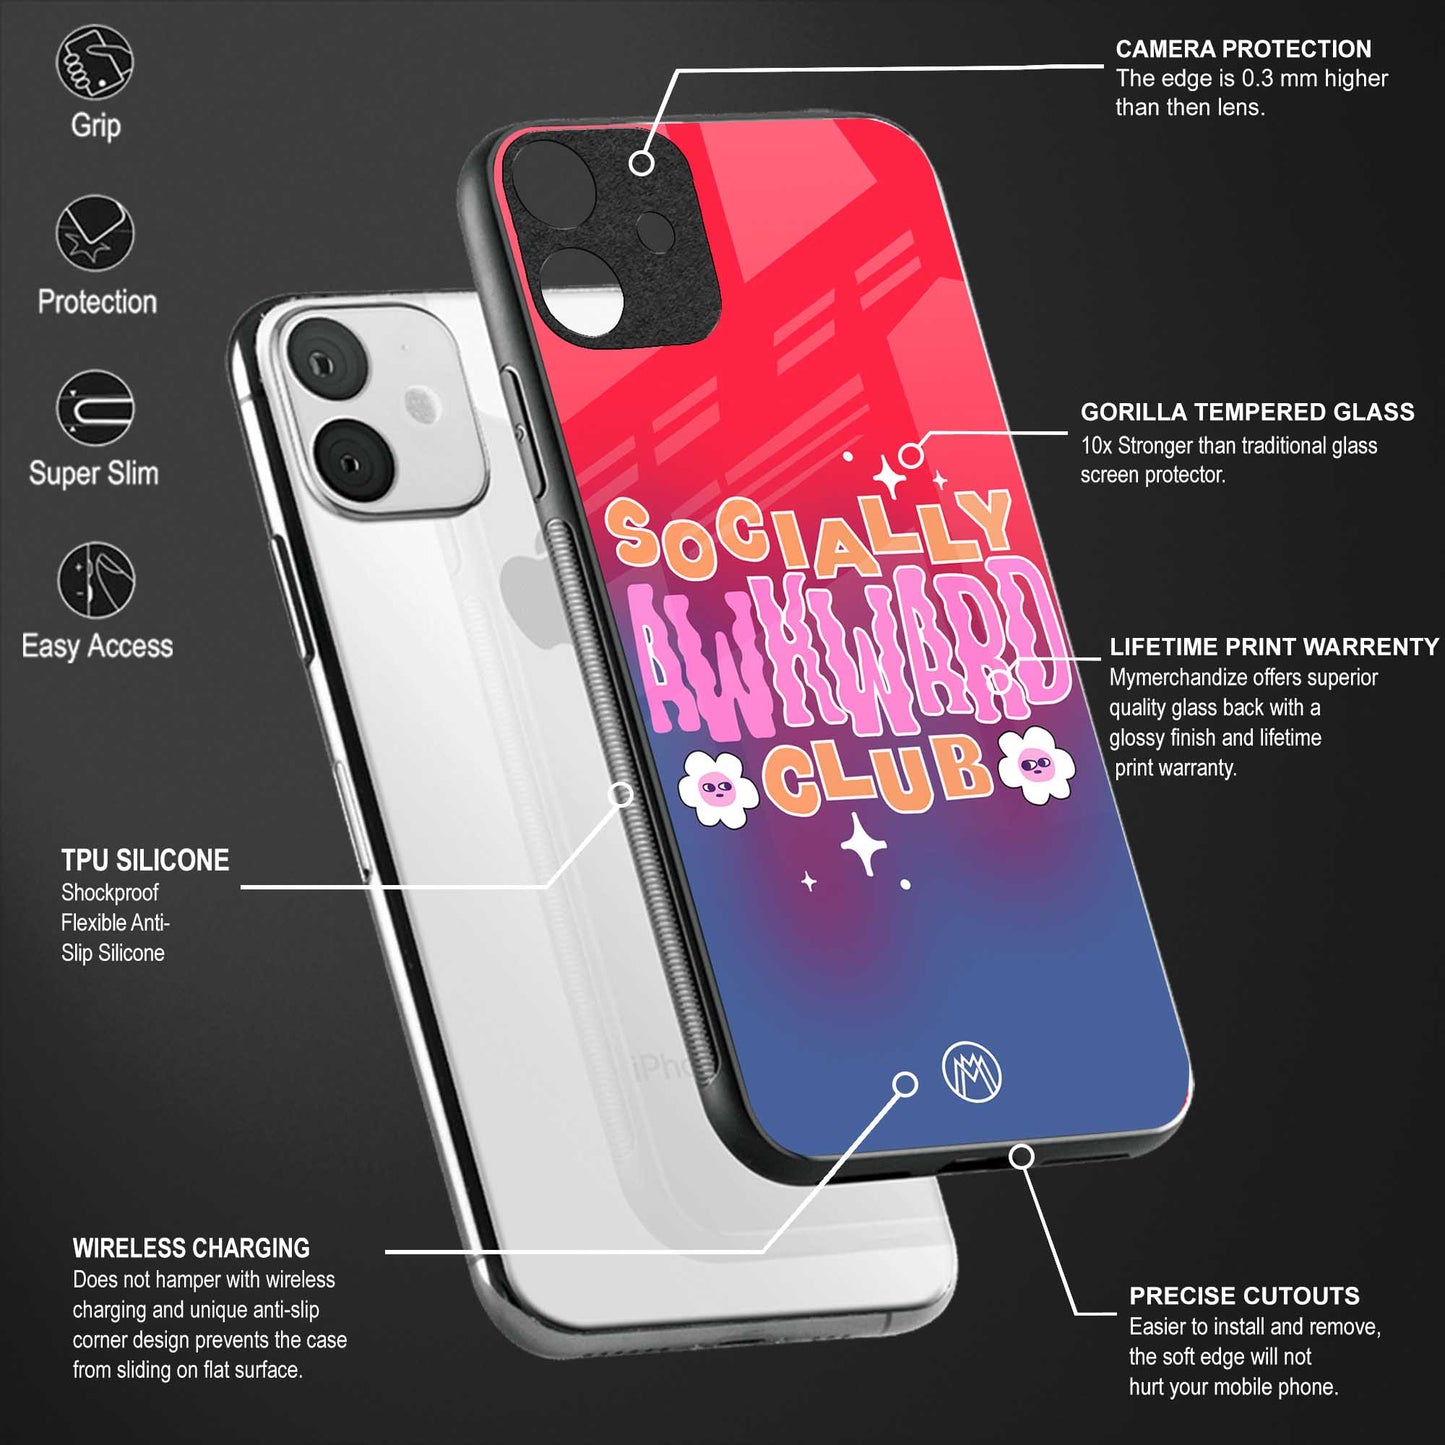 socially awkward club back phone cover | glass case for samsung galaxy a53 5g